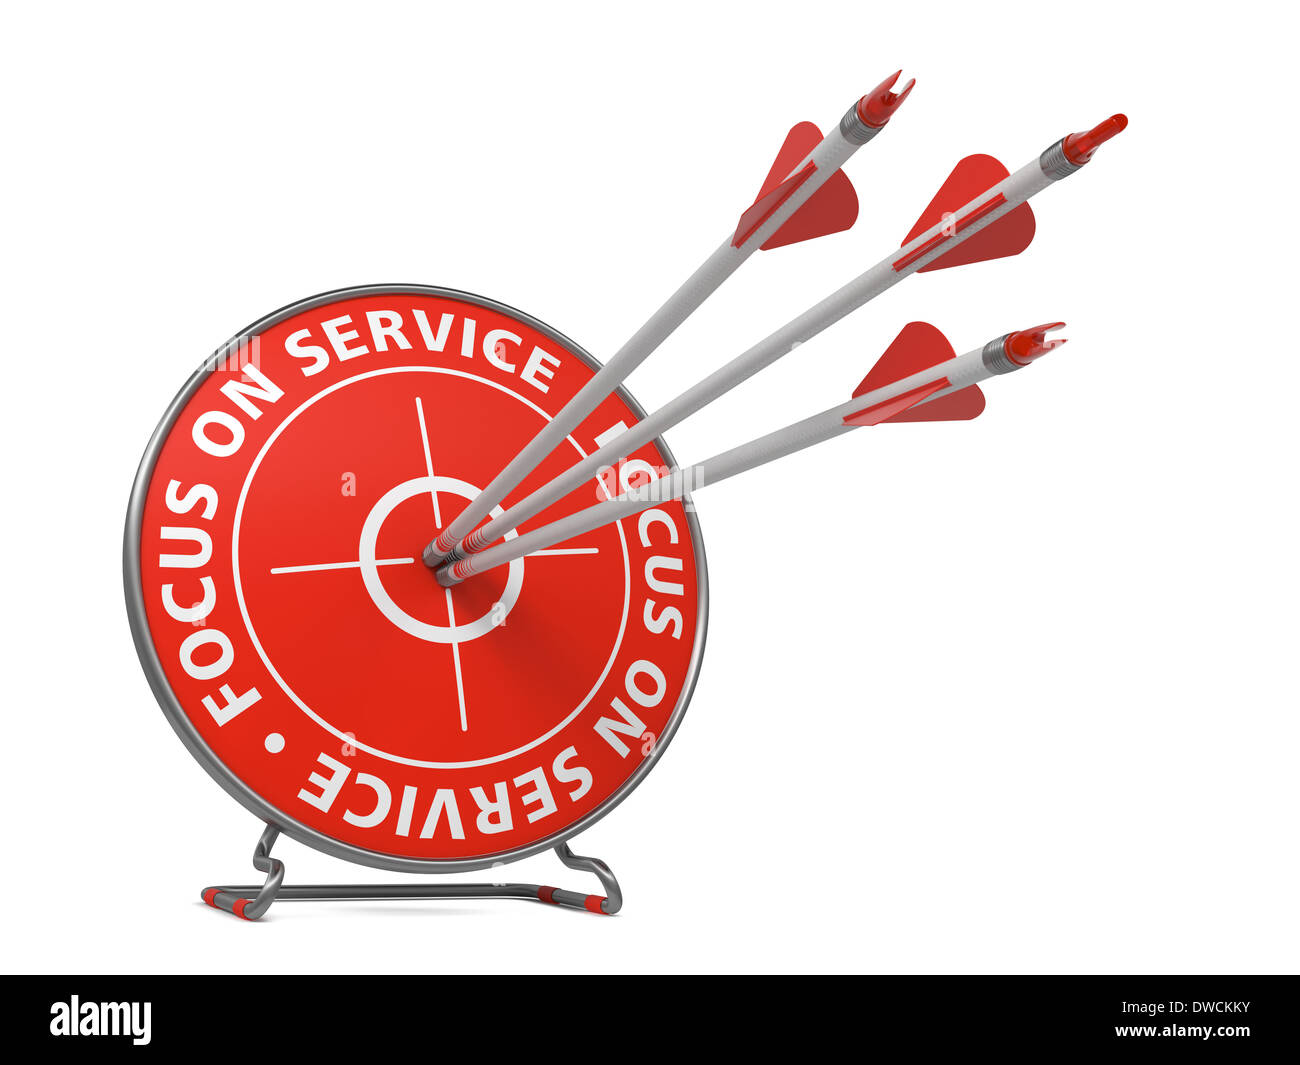 Fokus auf Service Slogan - Tippziel. Stockfoto